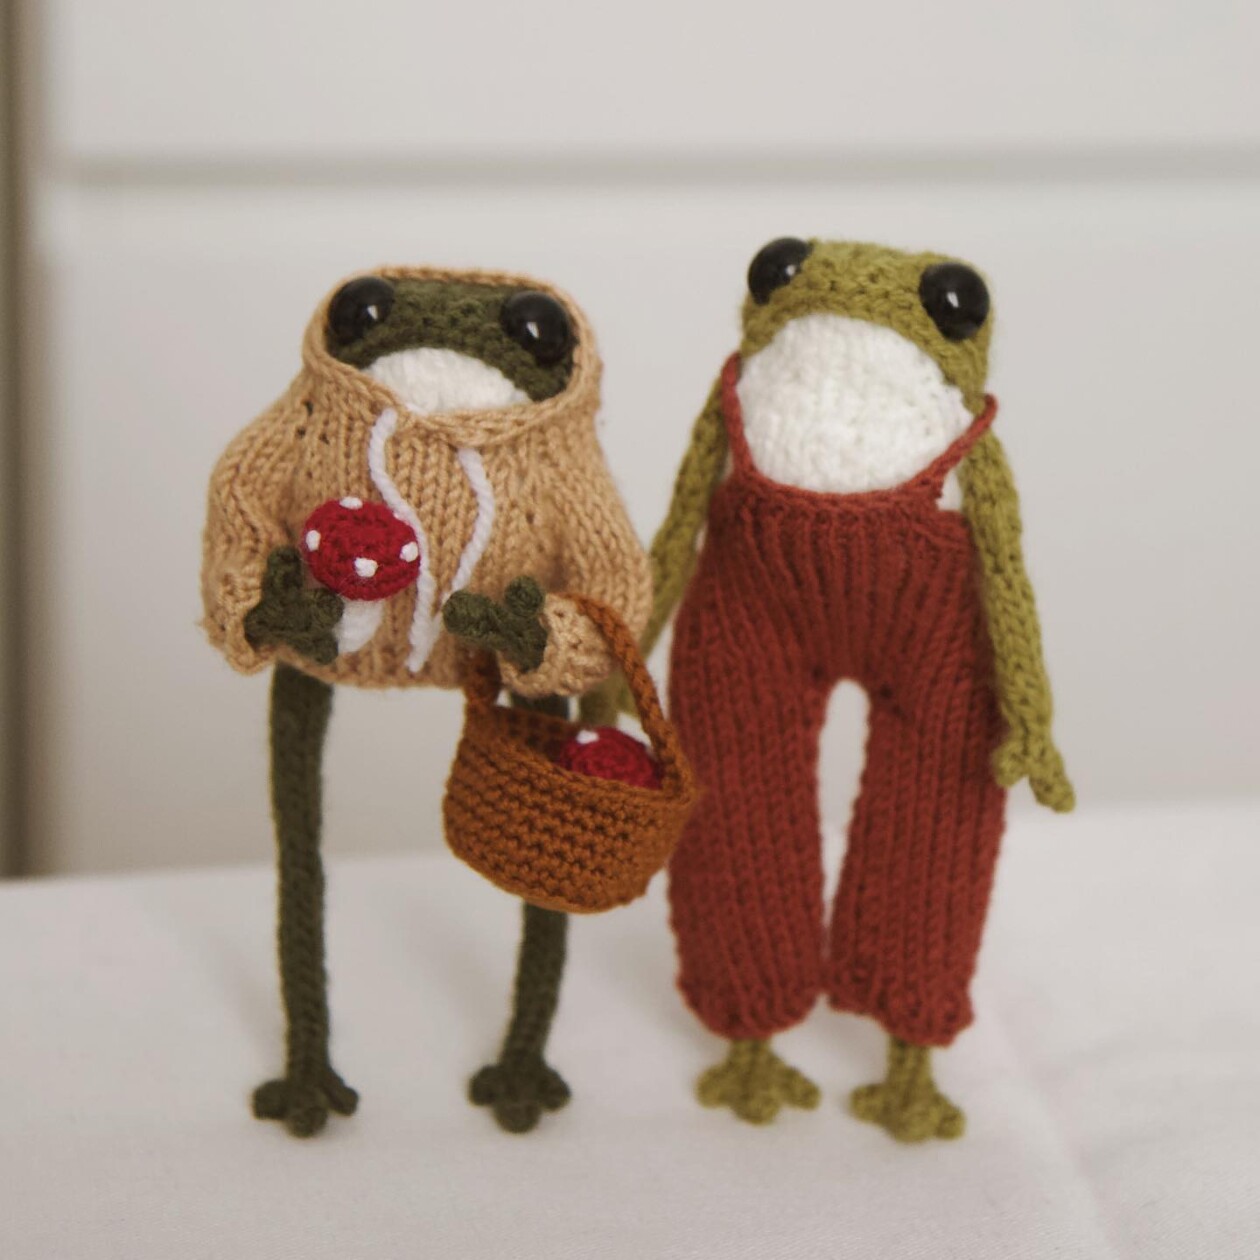 Enchanting Anthropomorphized Frog Crochet Patterns By Elliot (26)